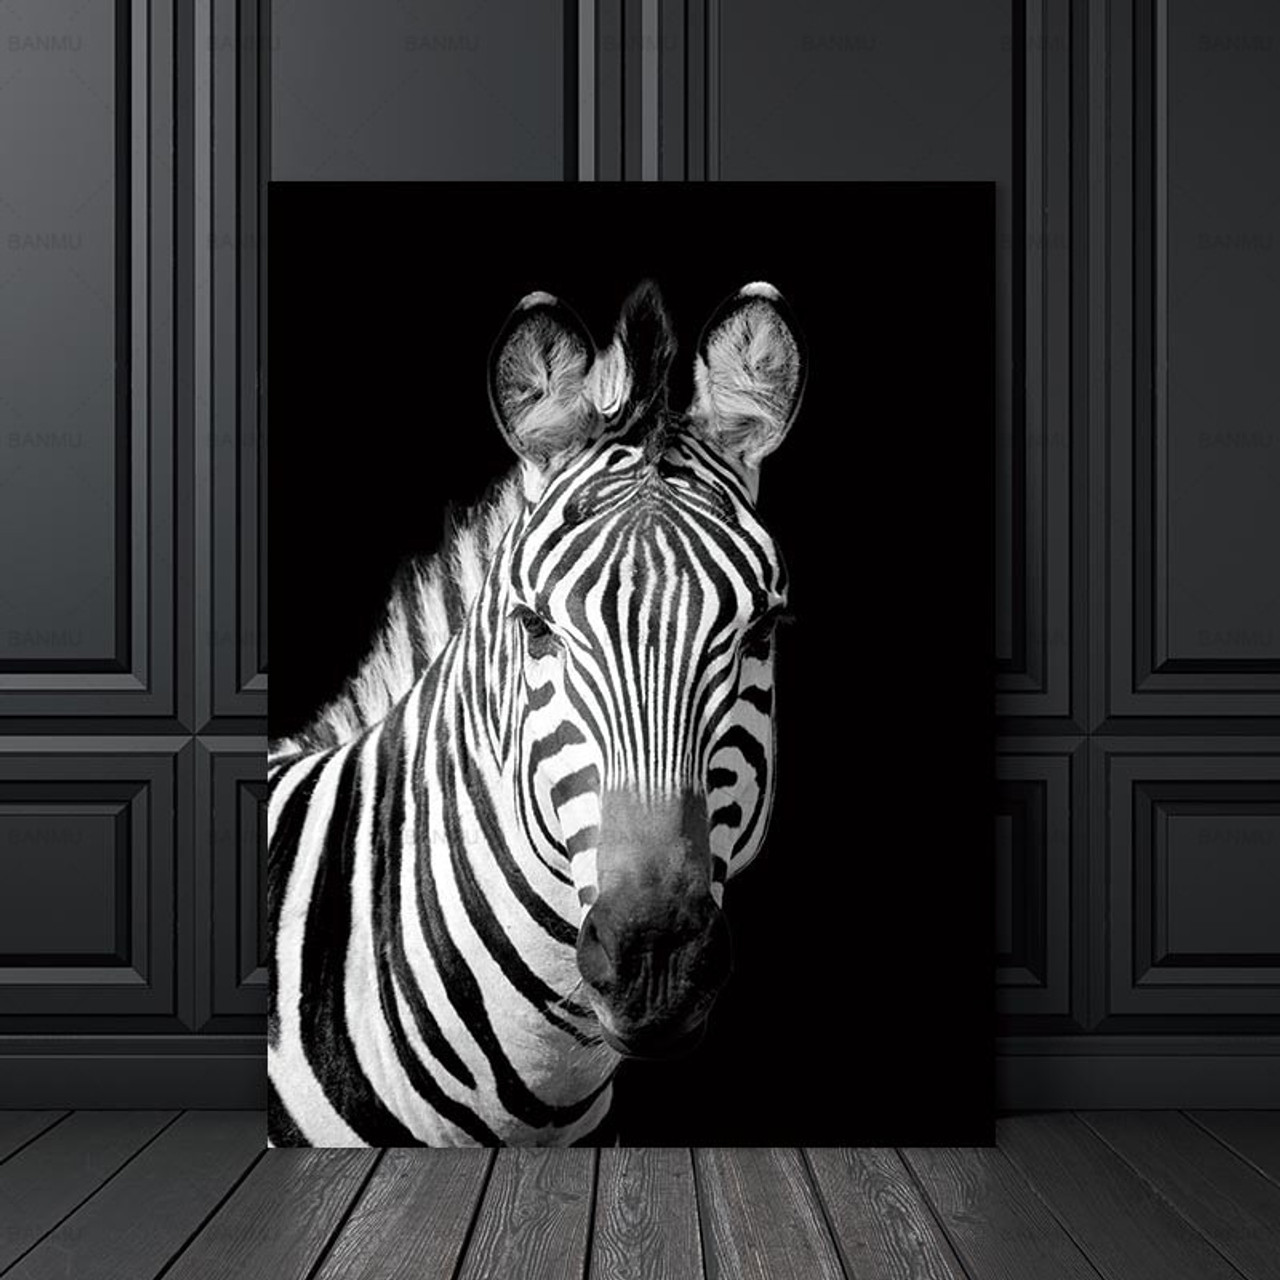 Black And White Portrait Of A Zebra Art Print Home Decor Wall Art Poster C Garden Poster Home Decor